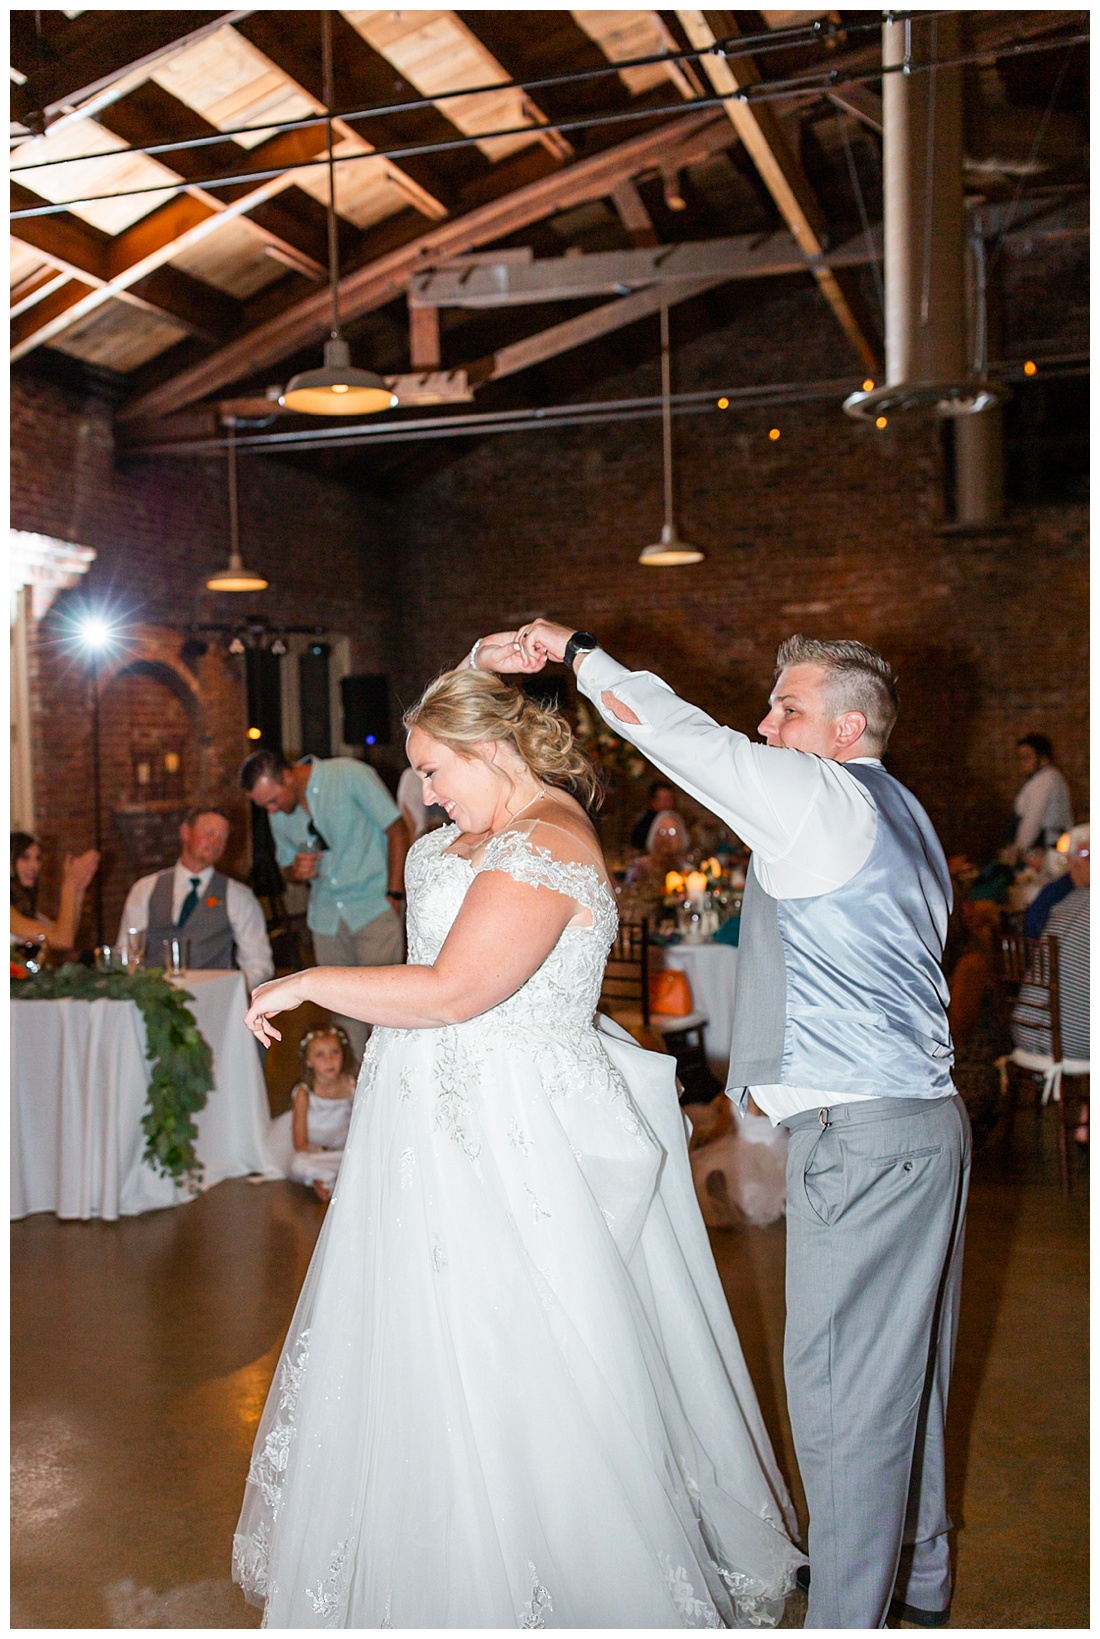 Wedding dance twirl